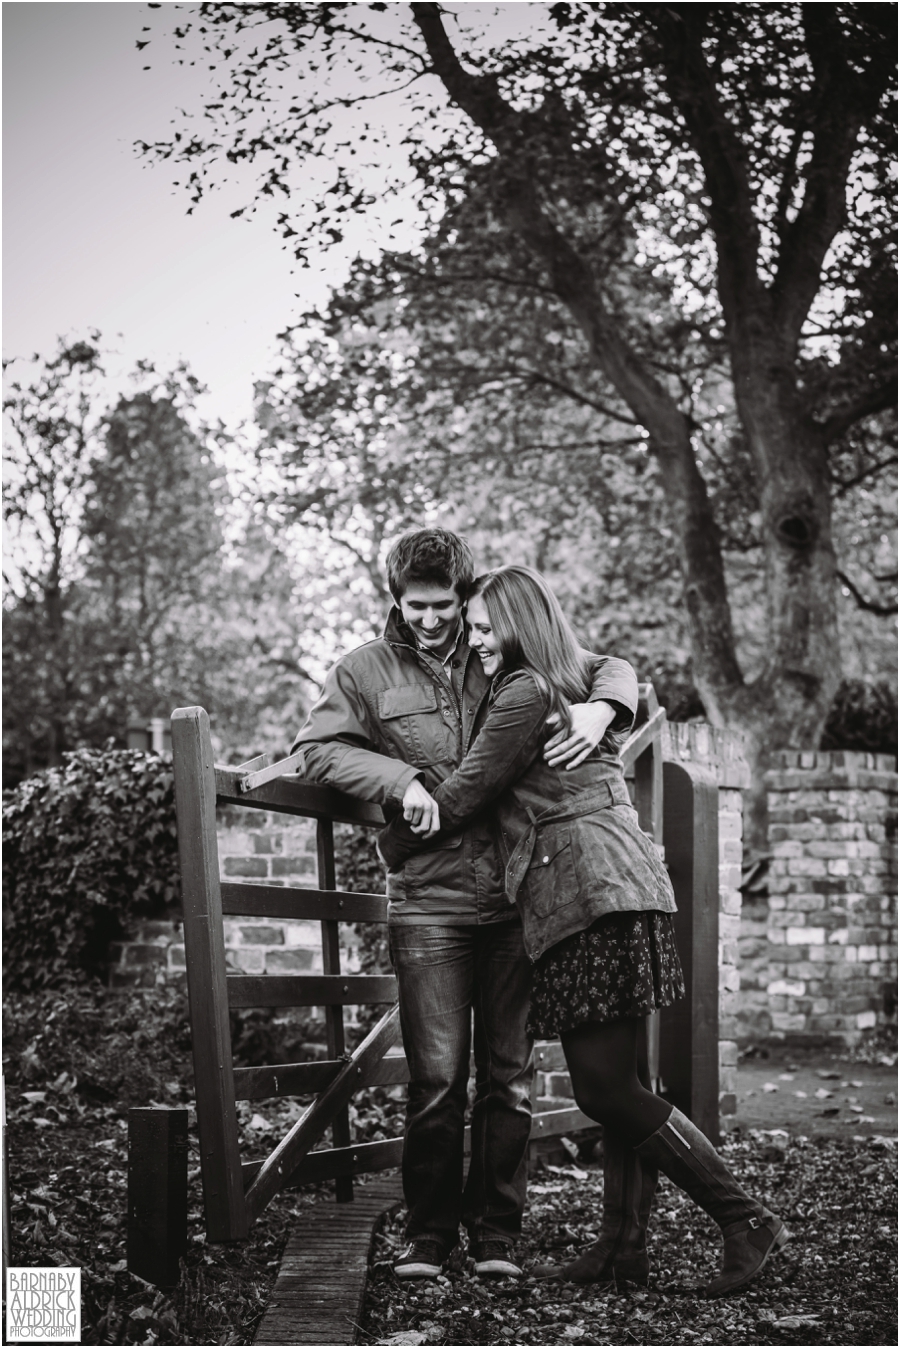 Lincolnshire Wedding Photographer, Nottinghamshire wedding photography, Barnaby Aldrick Wedding Photography